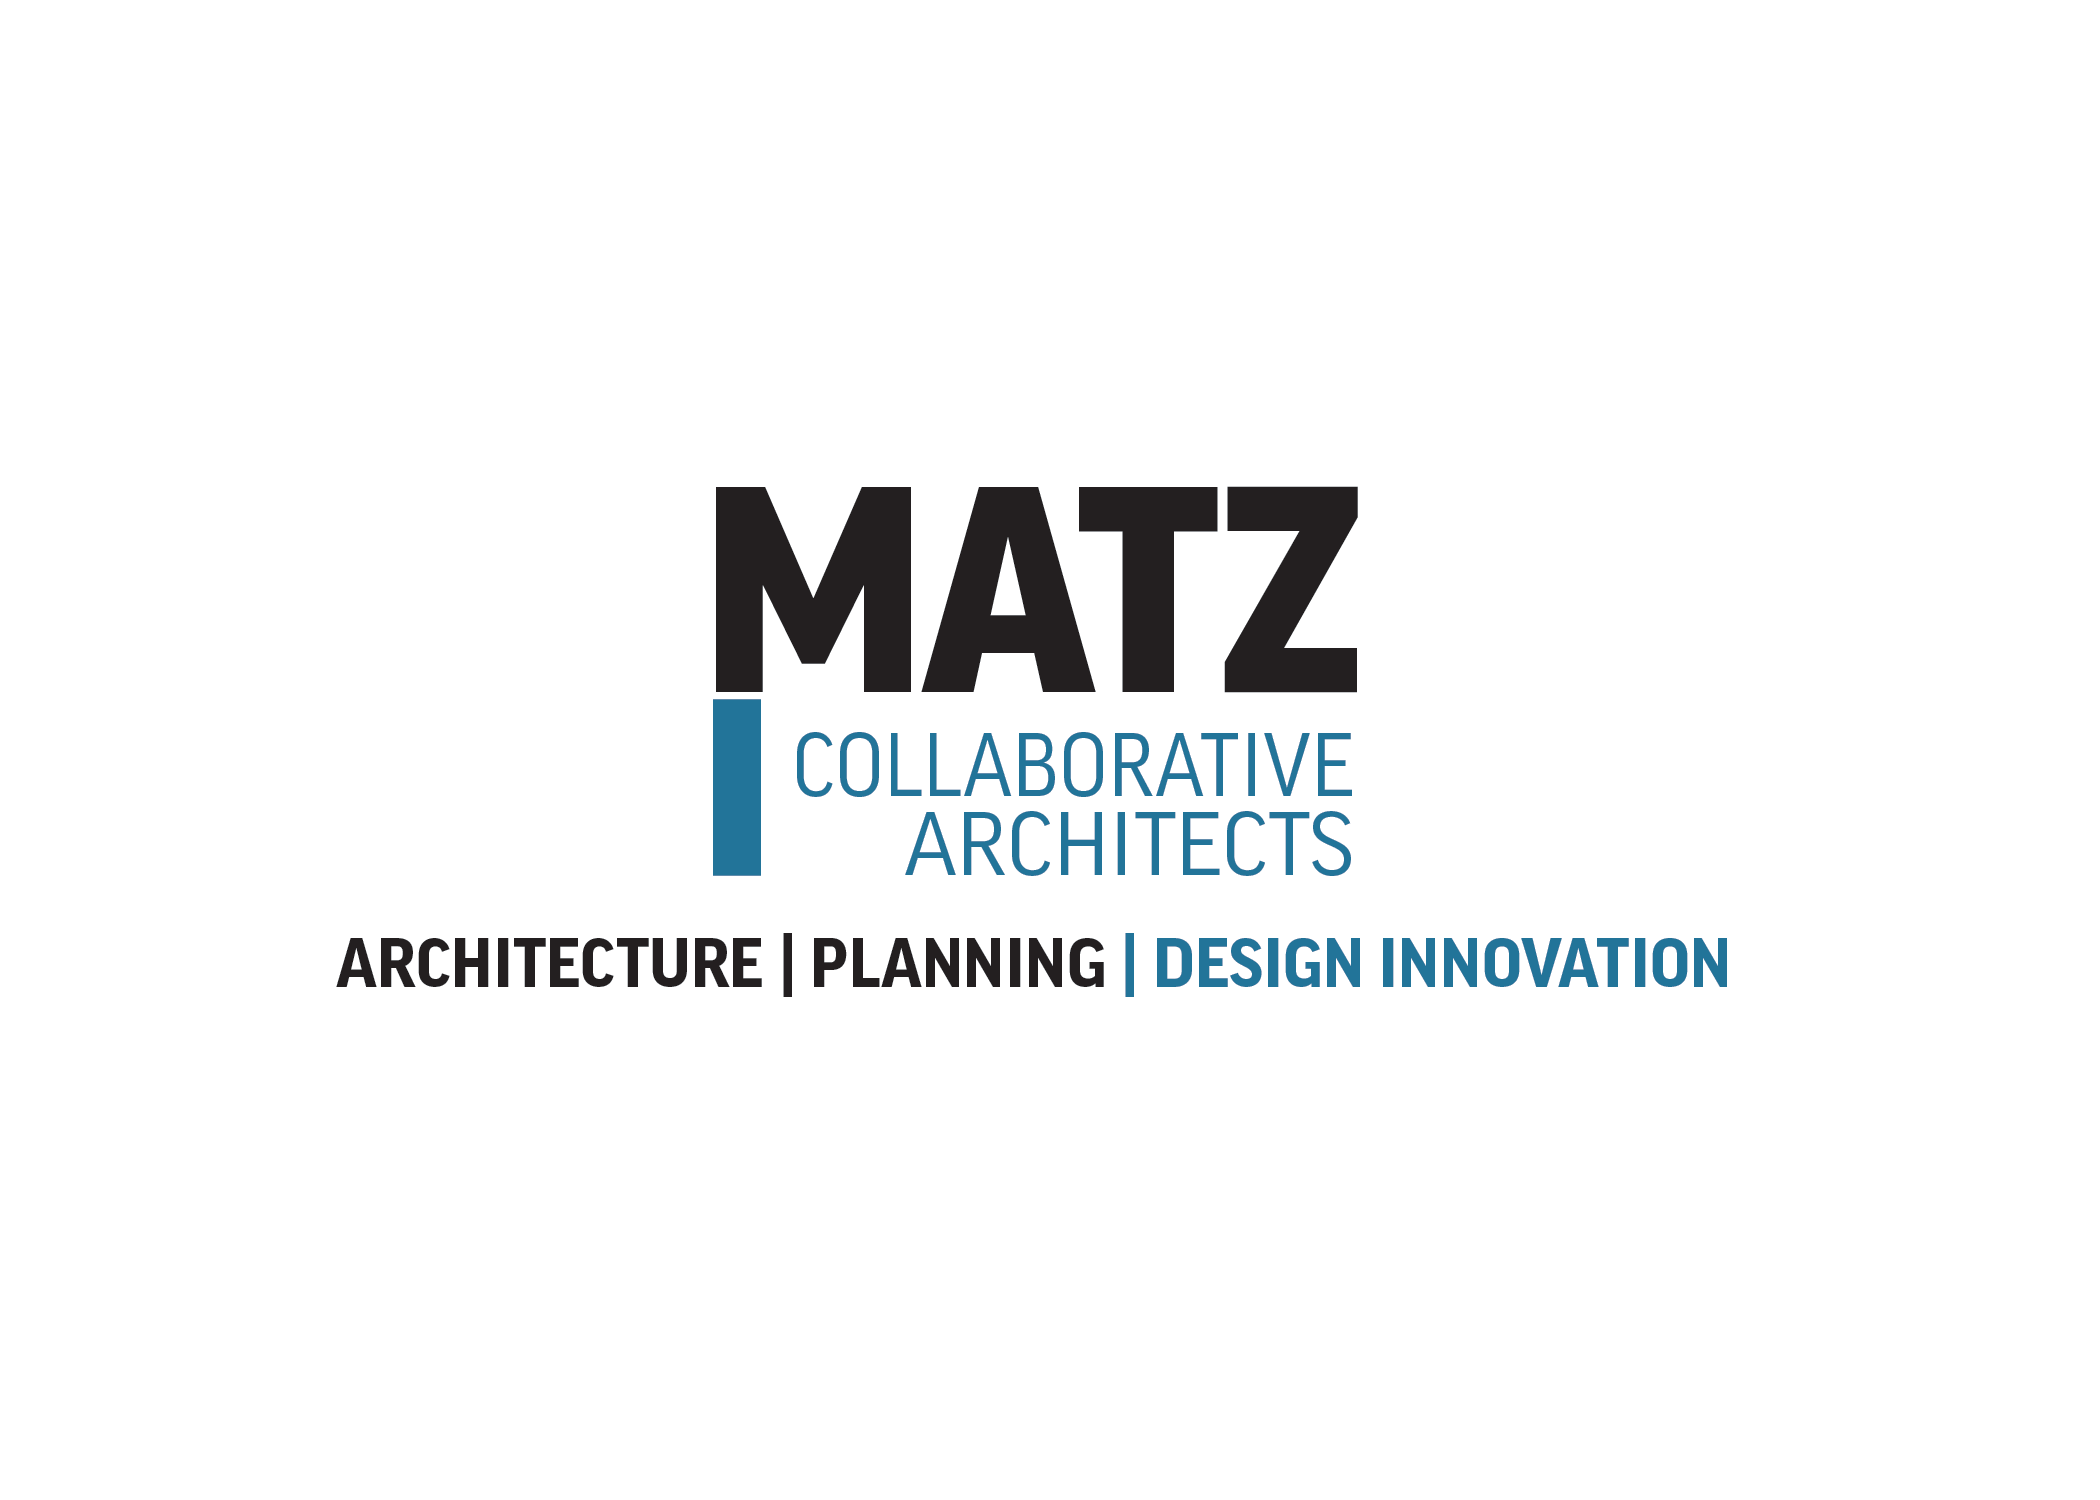 Matz Collaborative Architects logo and tagline "Architecture Planning Design Innovation"